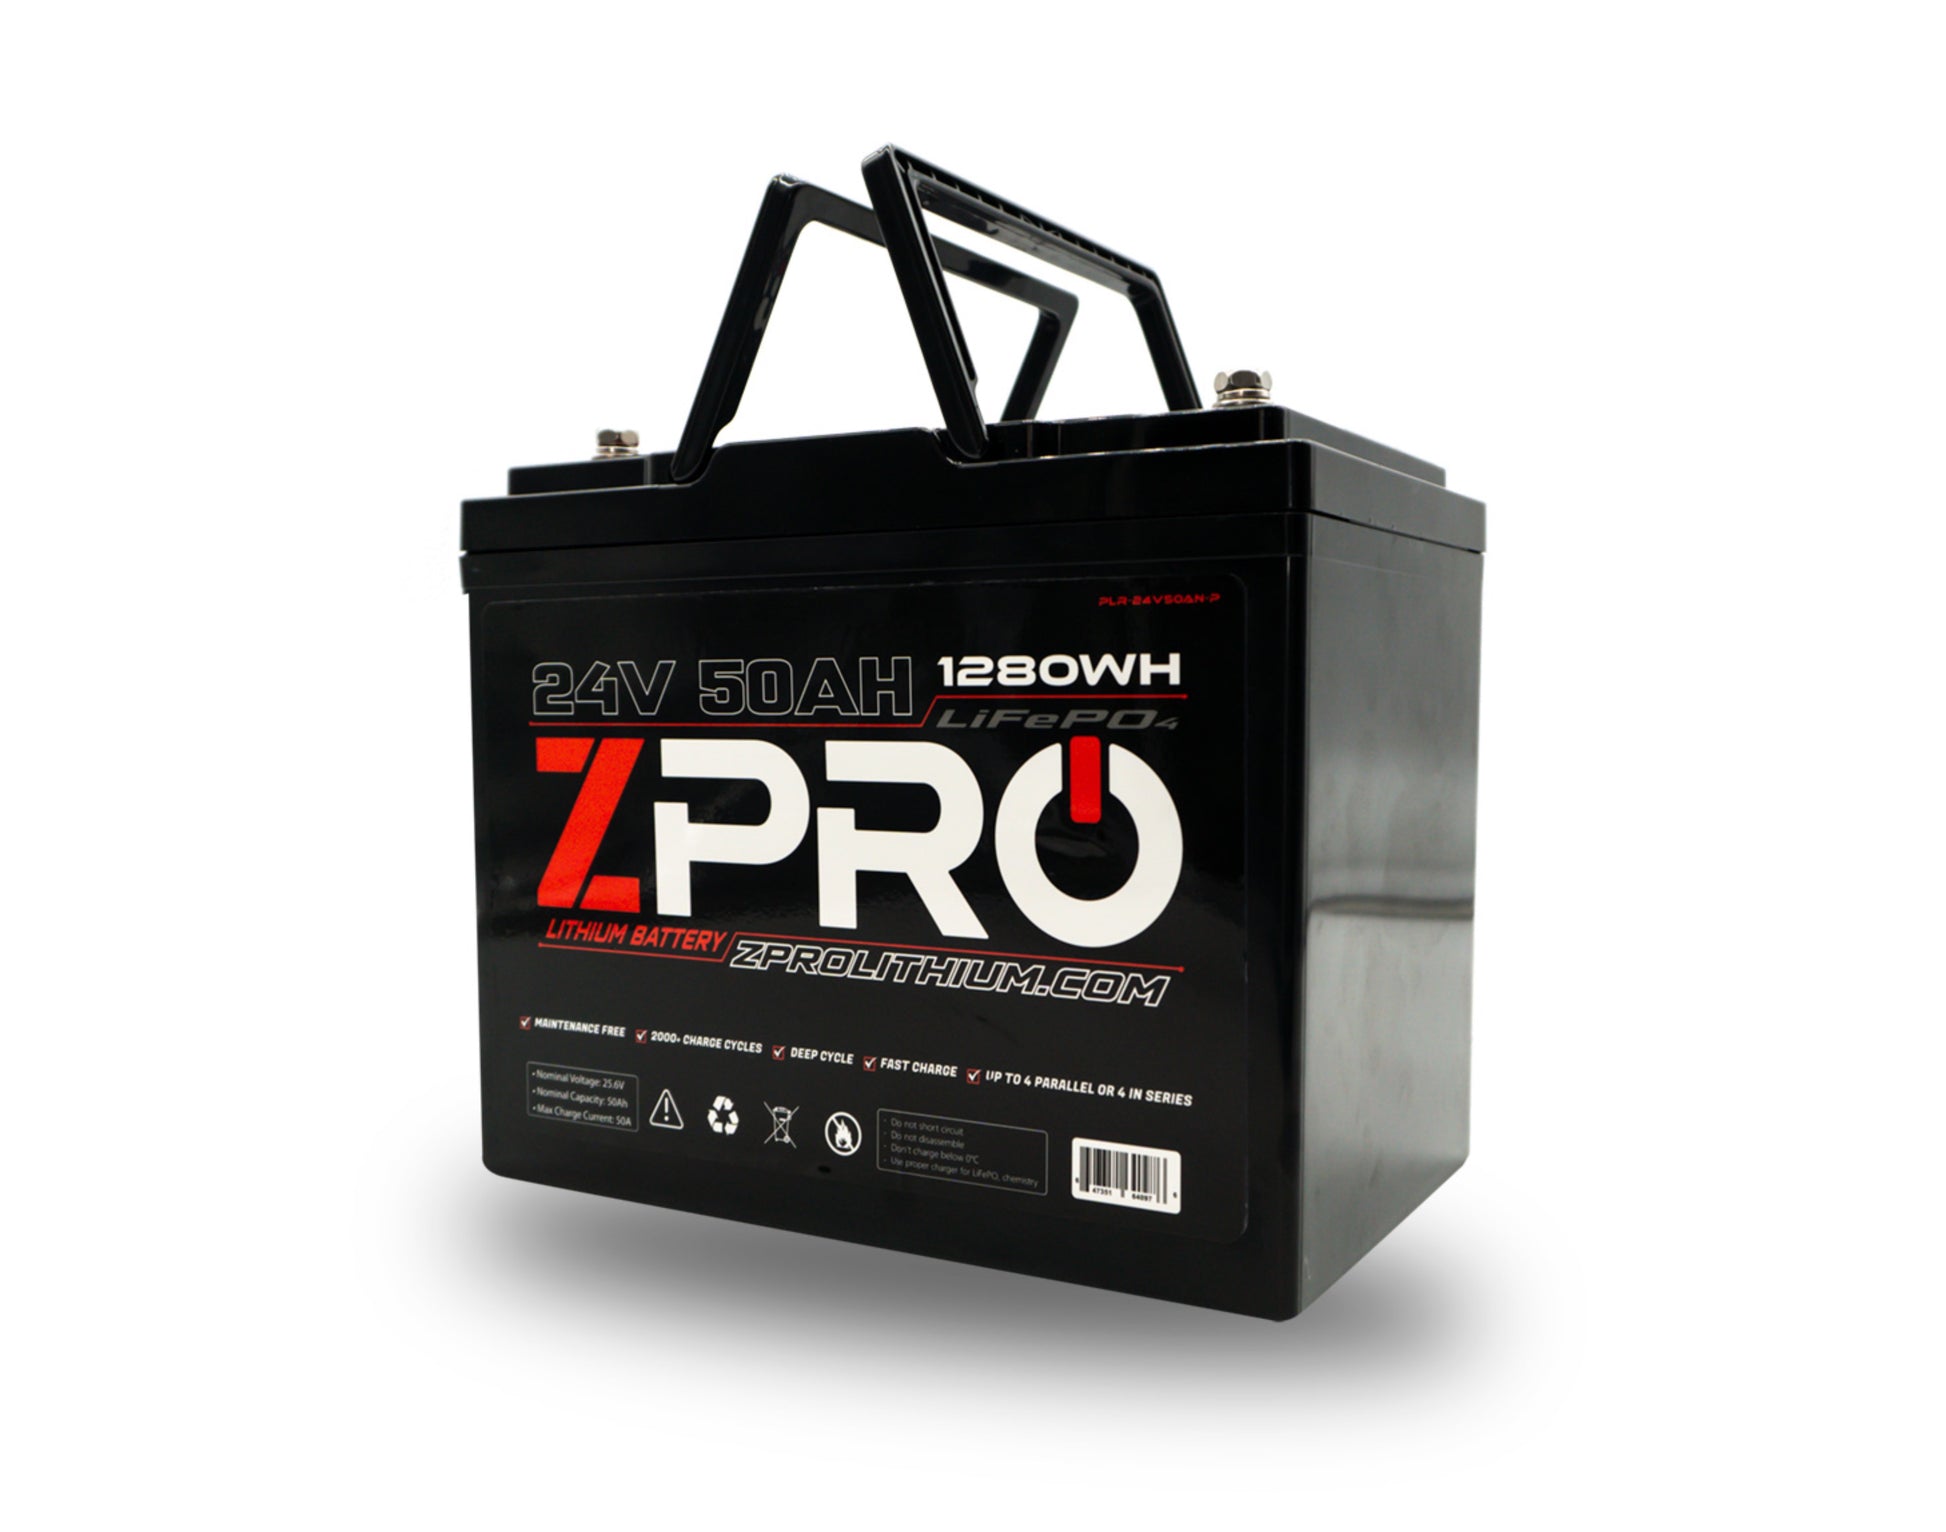 ZPRO Lithium 24V 50 Ah Battery